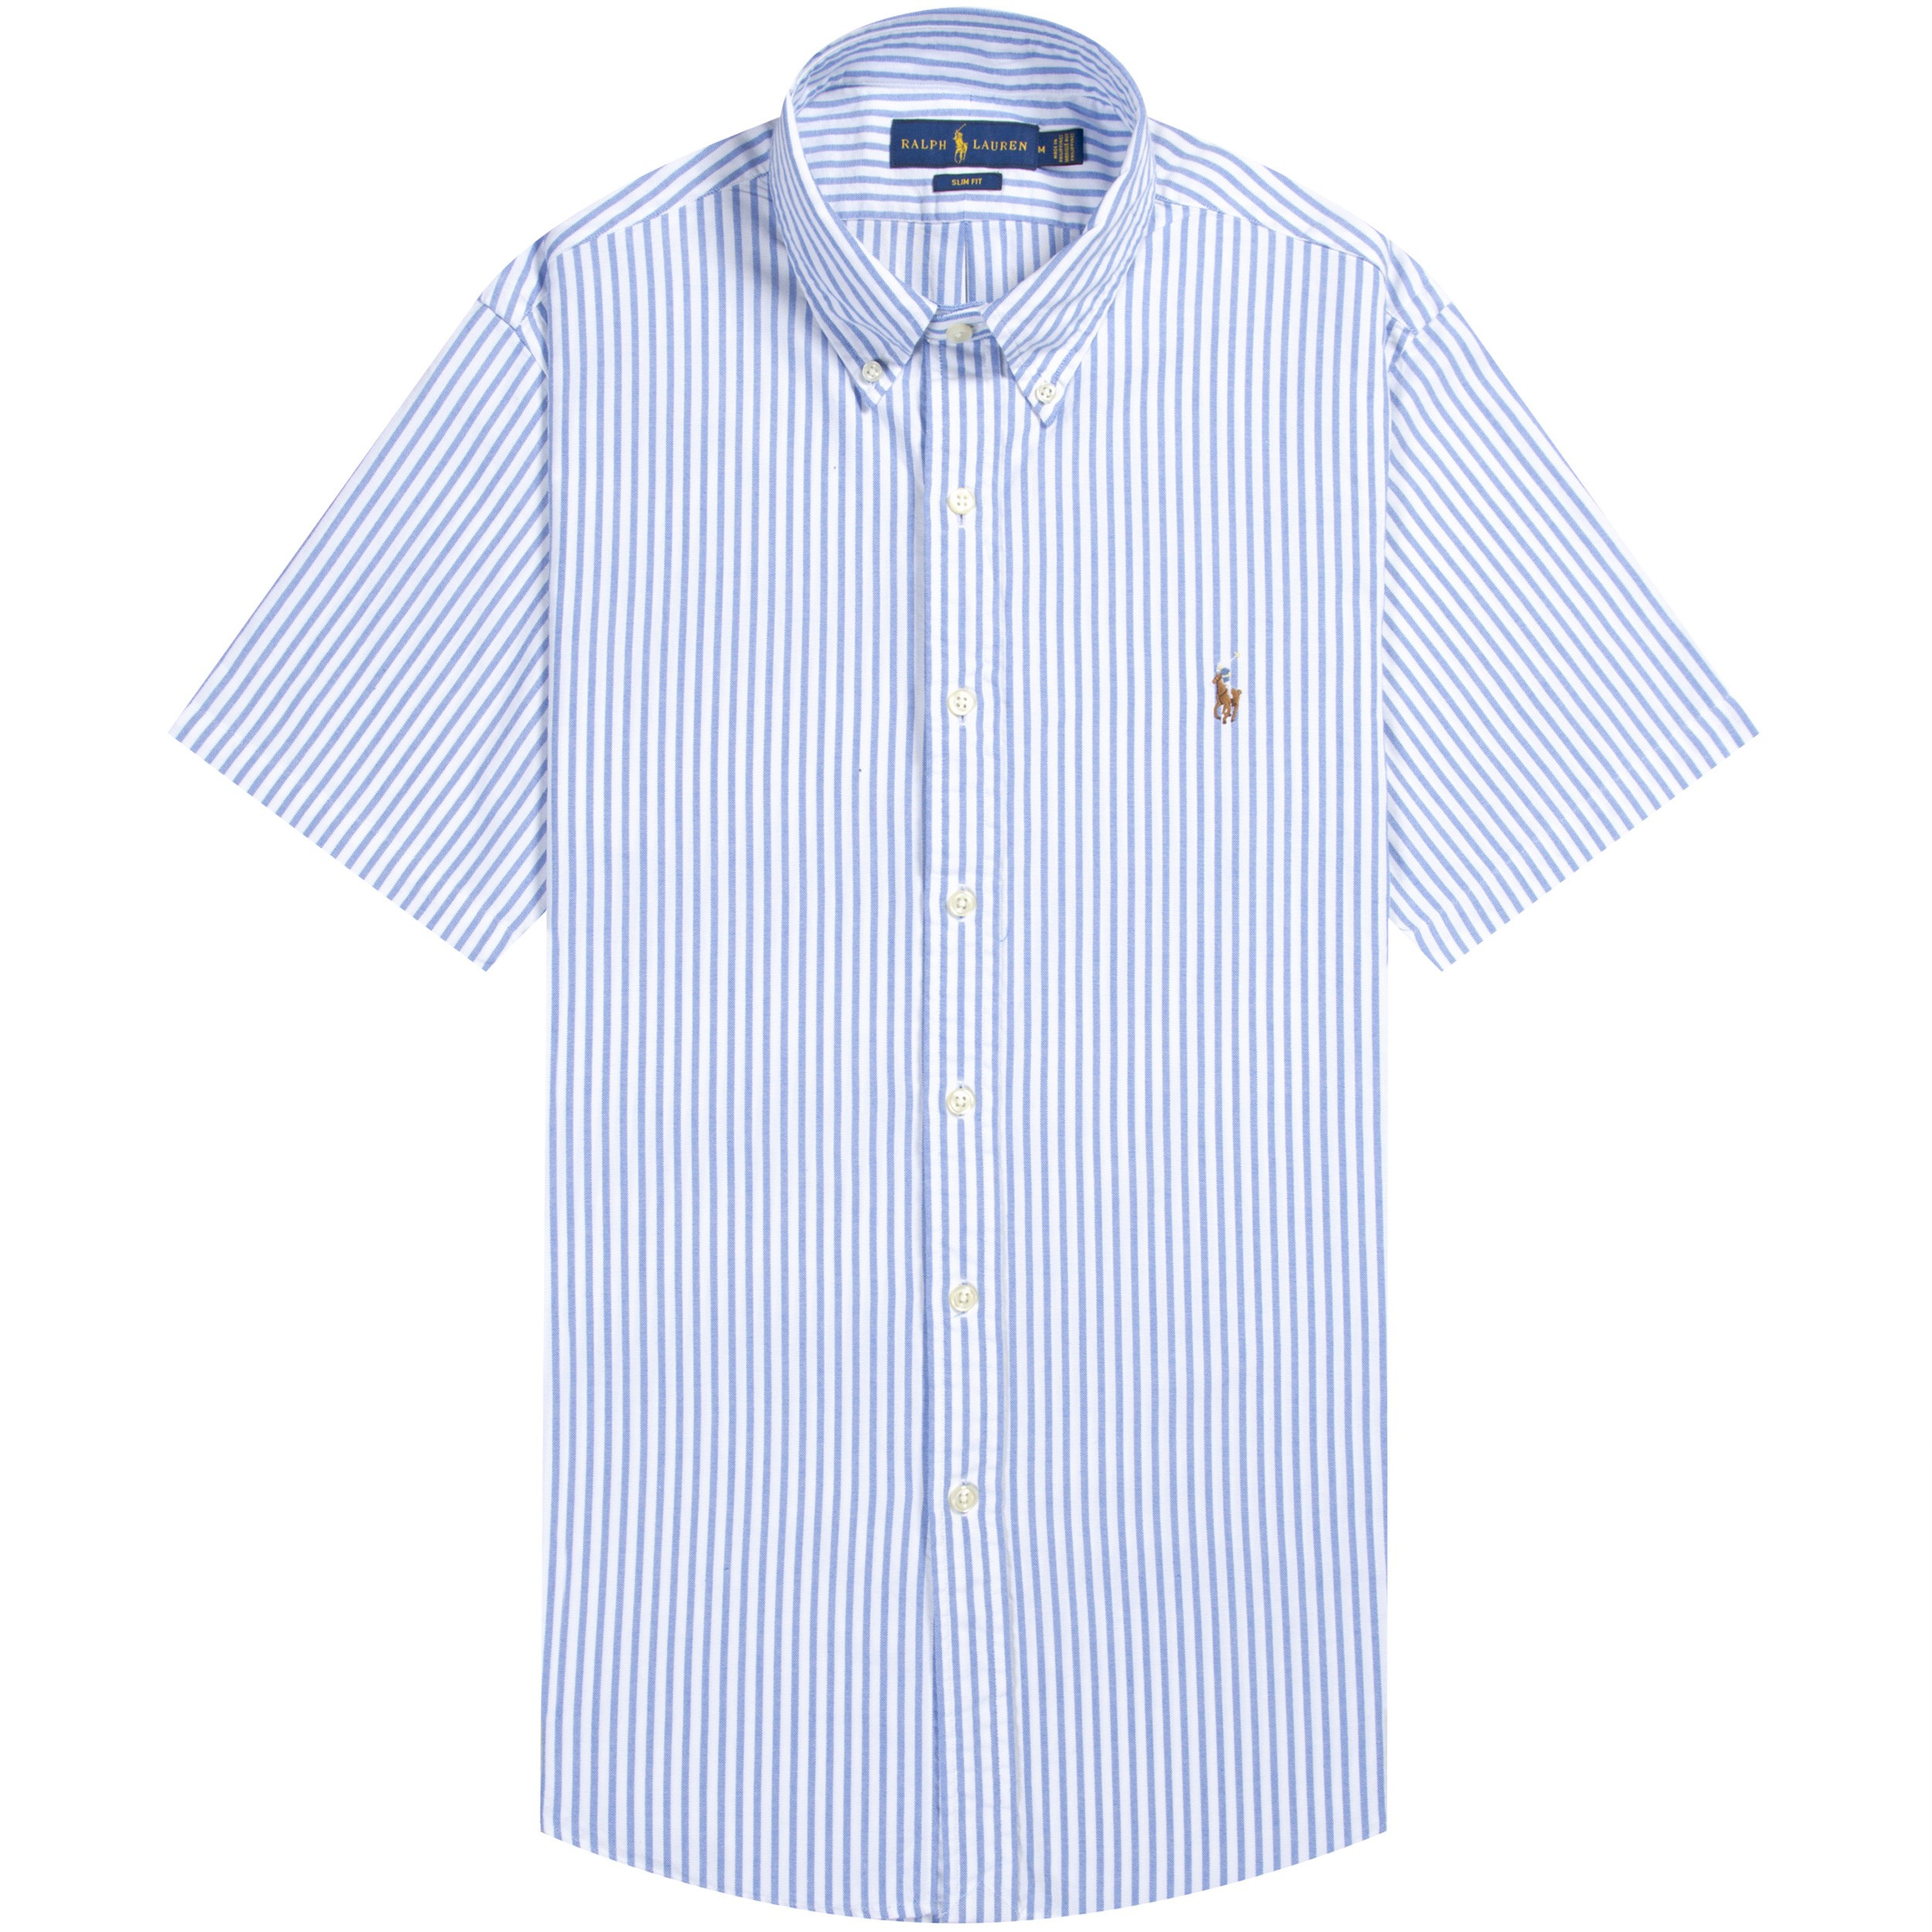 Polo Ralph Lauren Ralph Lauren Slim Fit Short Sleeved Striped Shirt Blue/ White